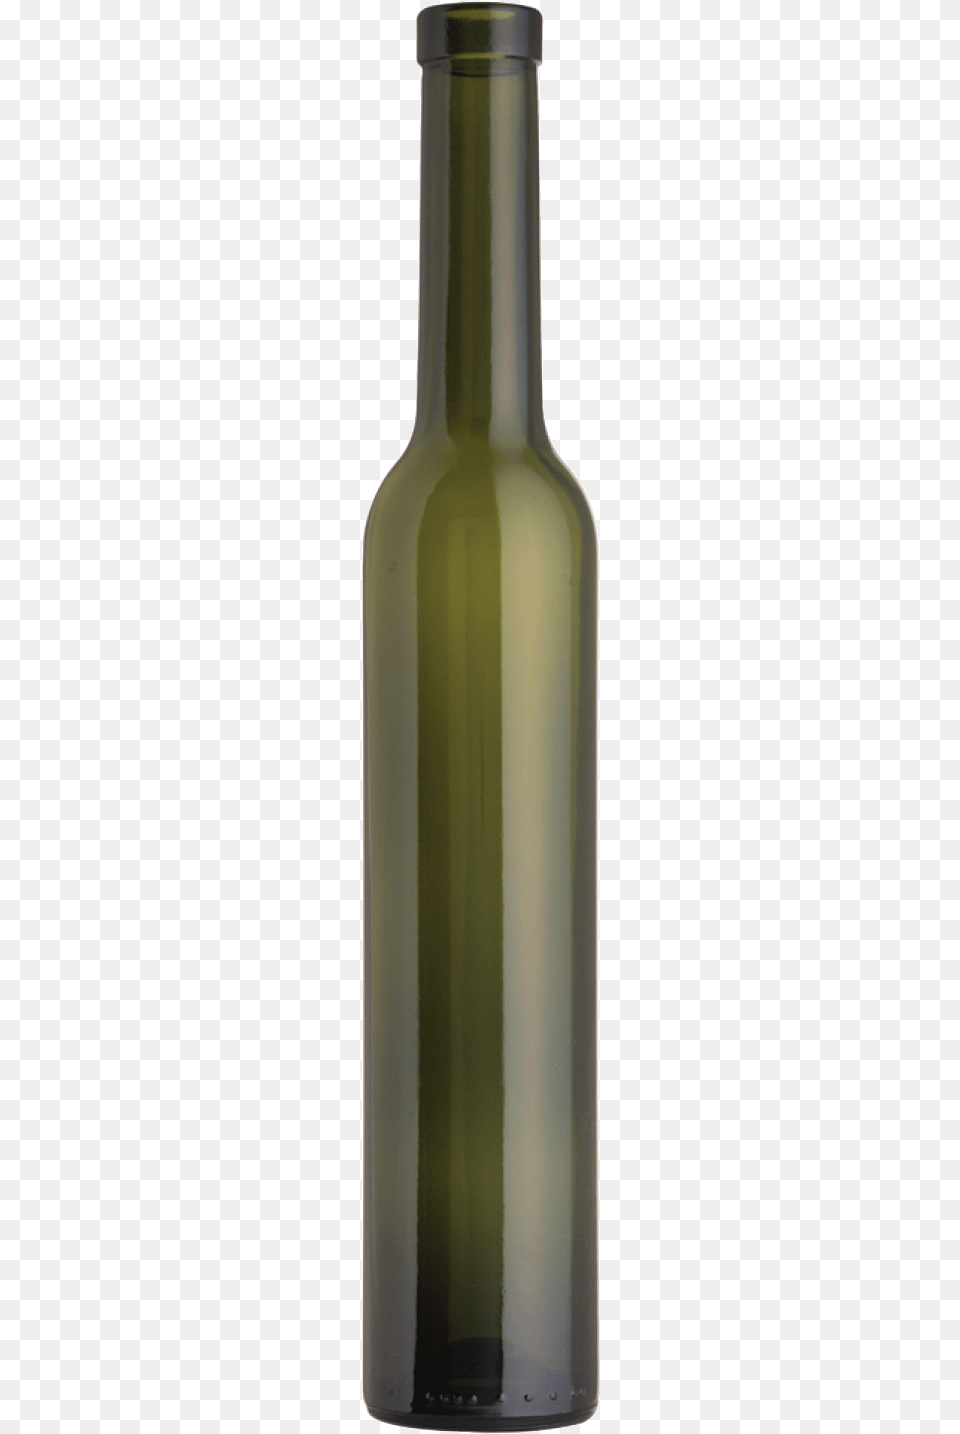 Wine Bottle And Glass, Alcohol, Beverage, Liquor, Wine Bottle Png